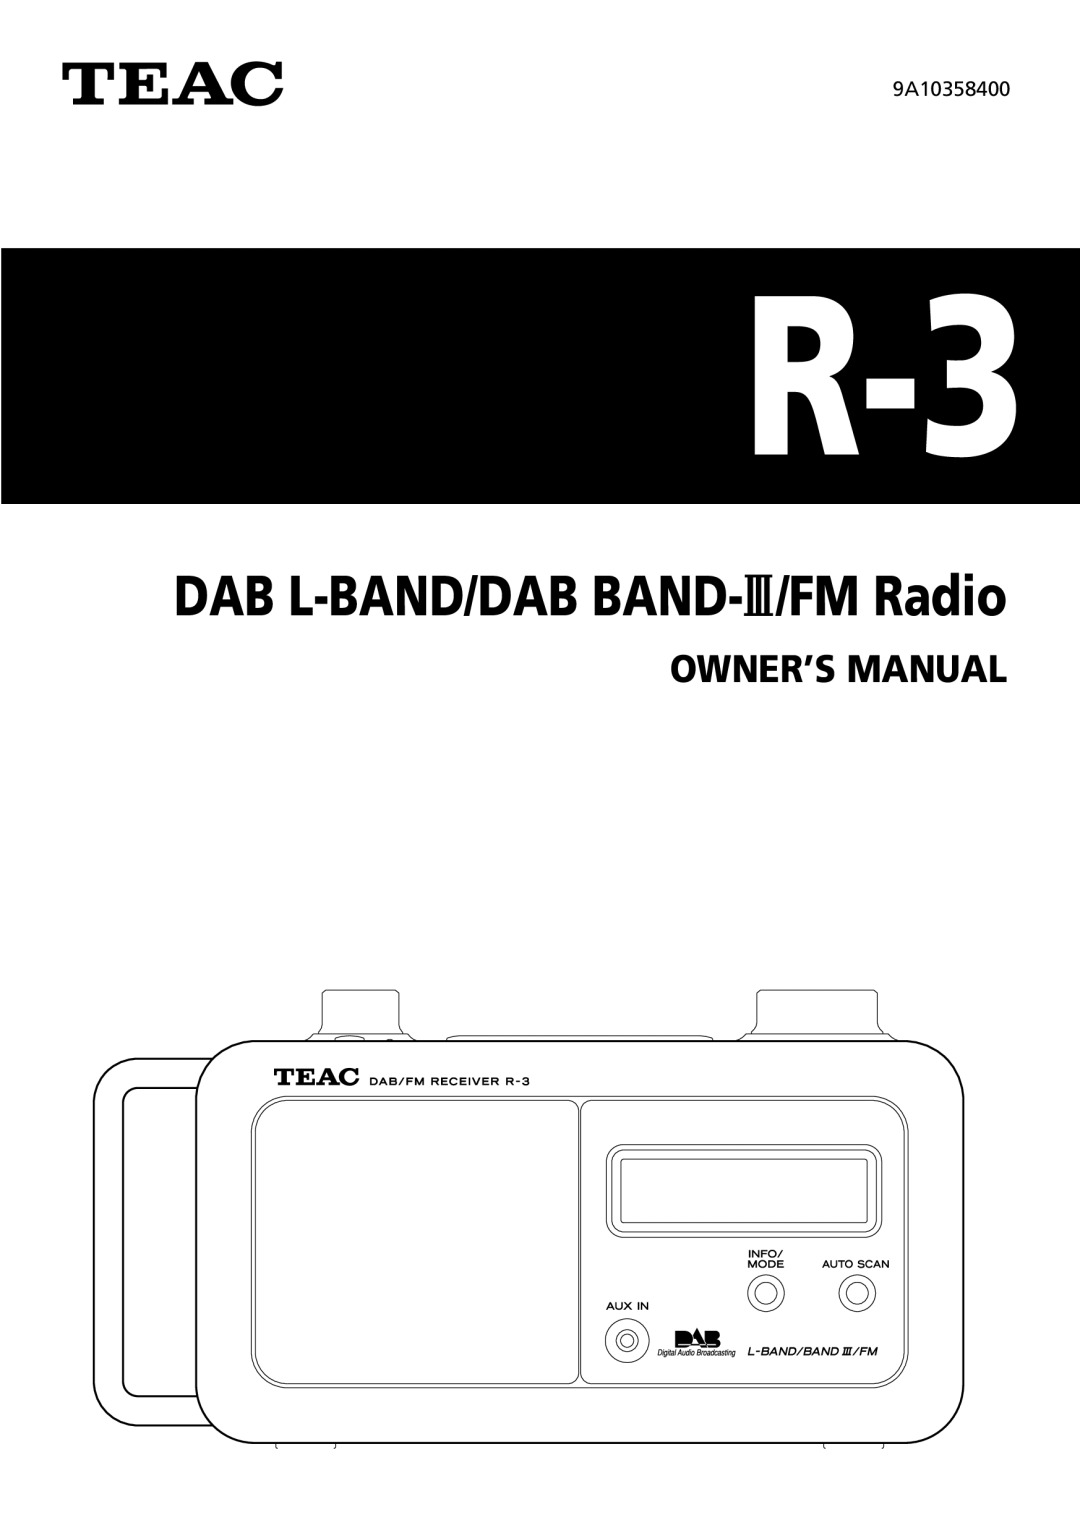 Teac R-3 owner manual DAB L-BAND/DAB BAND-#/FMRadio, 9A10358400 